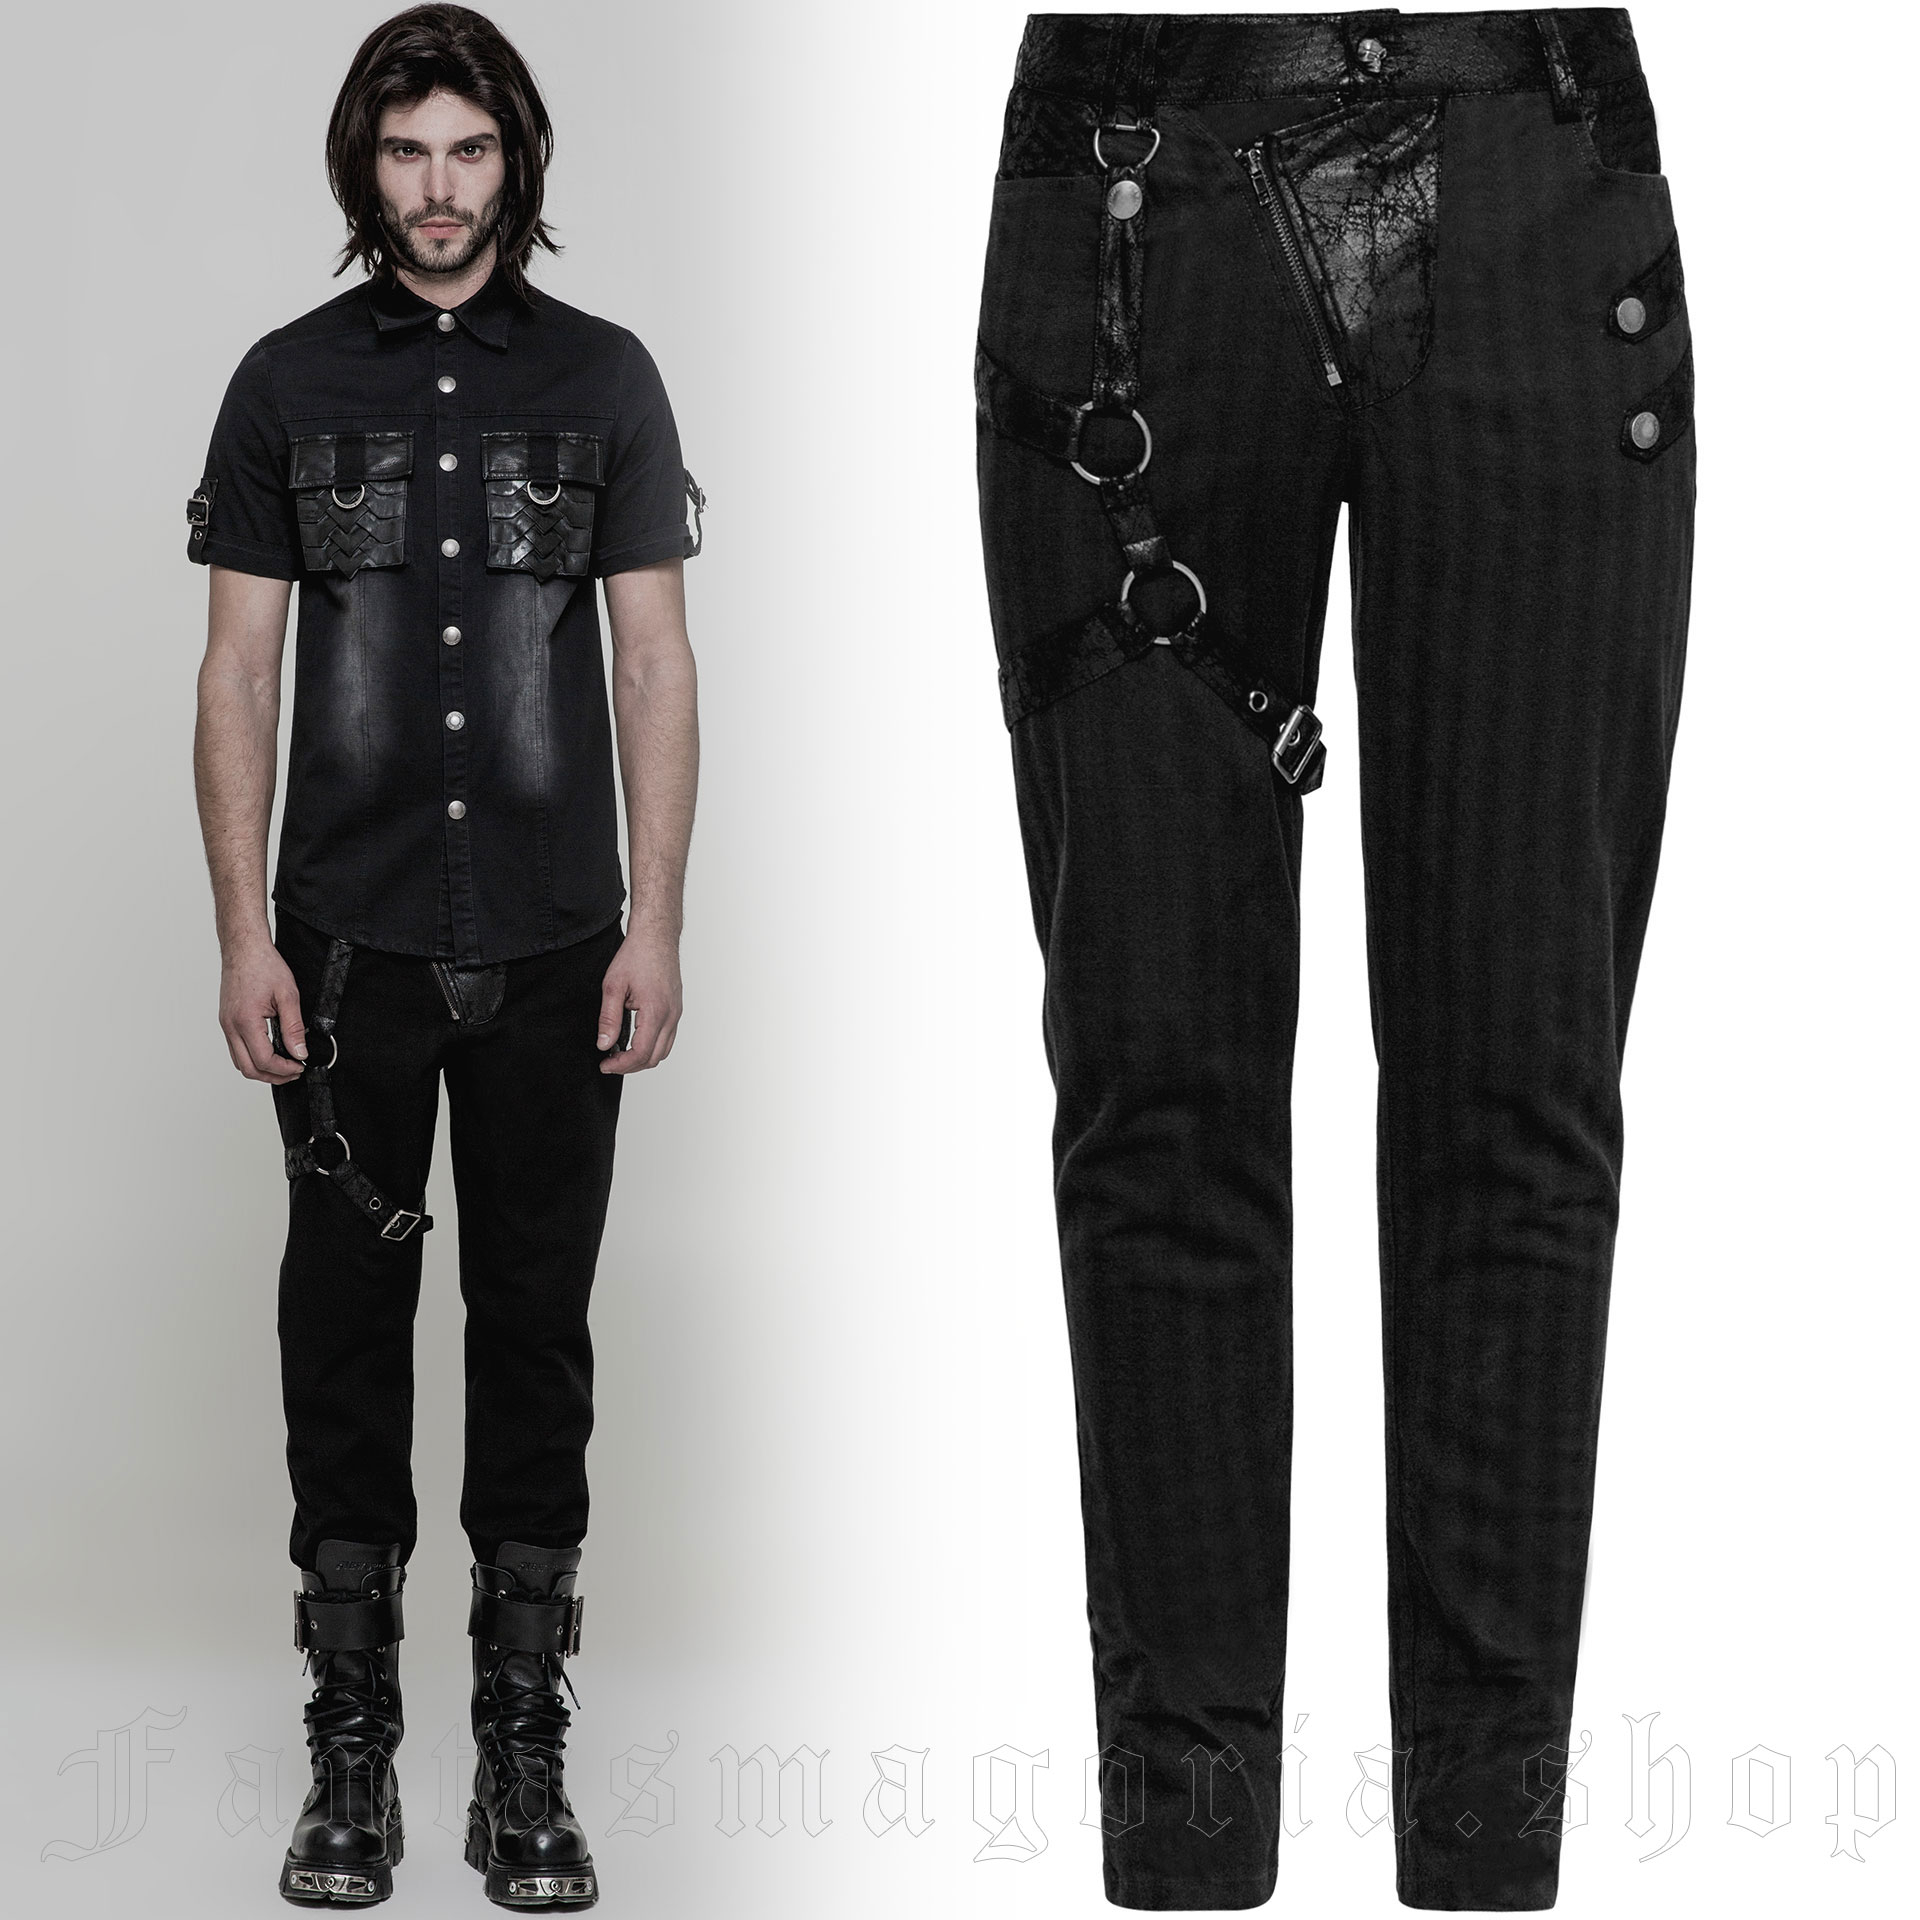 Dracarys Black-Dark Gray Striped Trousers - Punk Rave - WK-323/BK 1